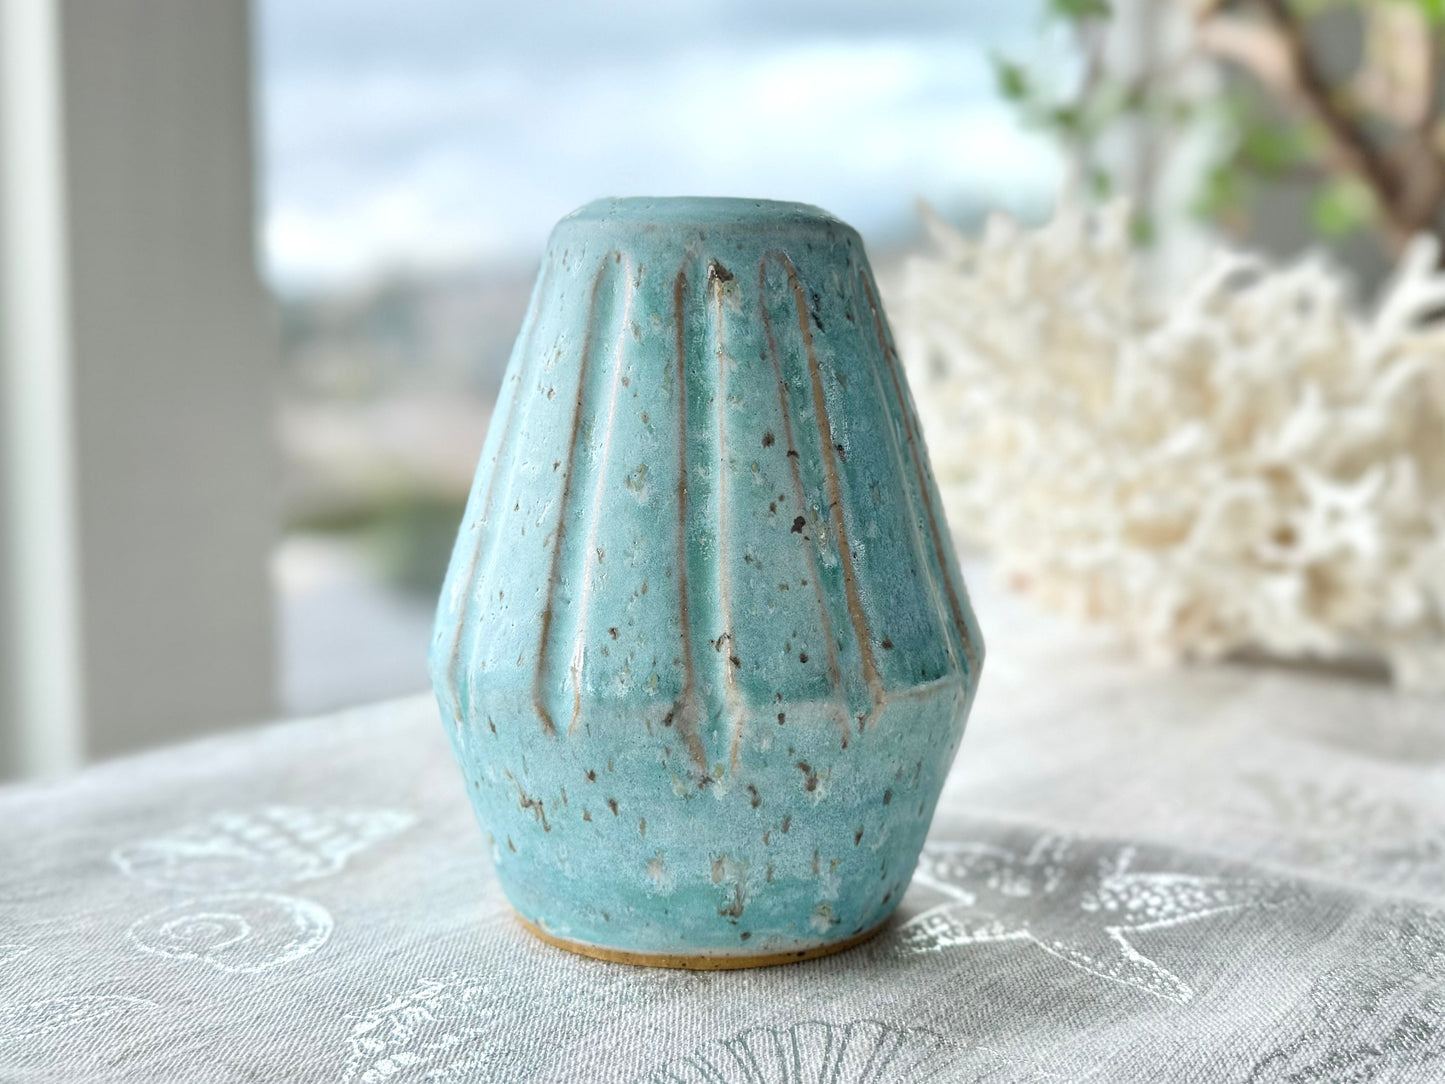 Handmade Pottery Vases - Set of 3